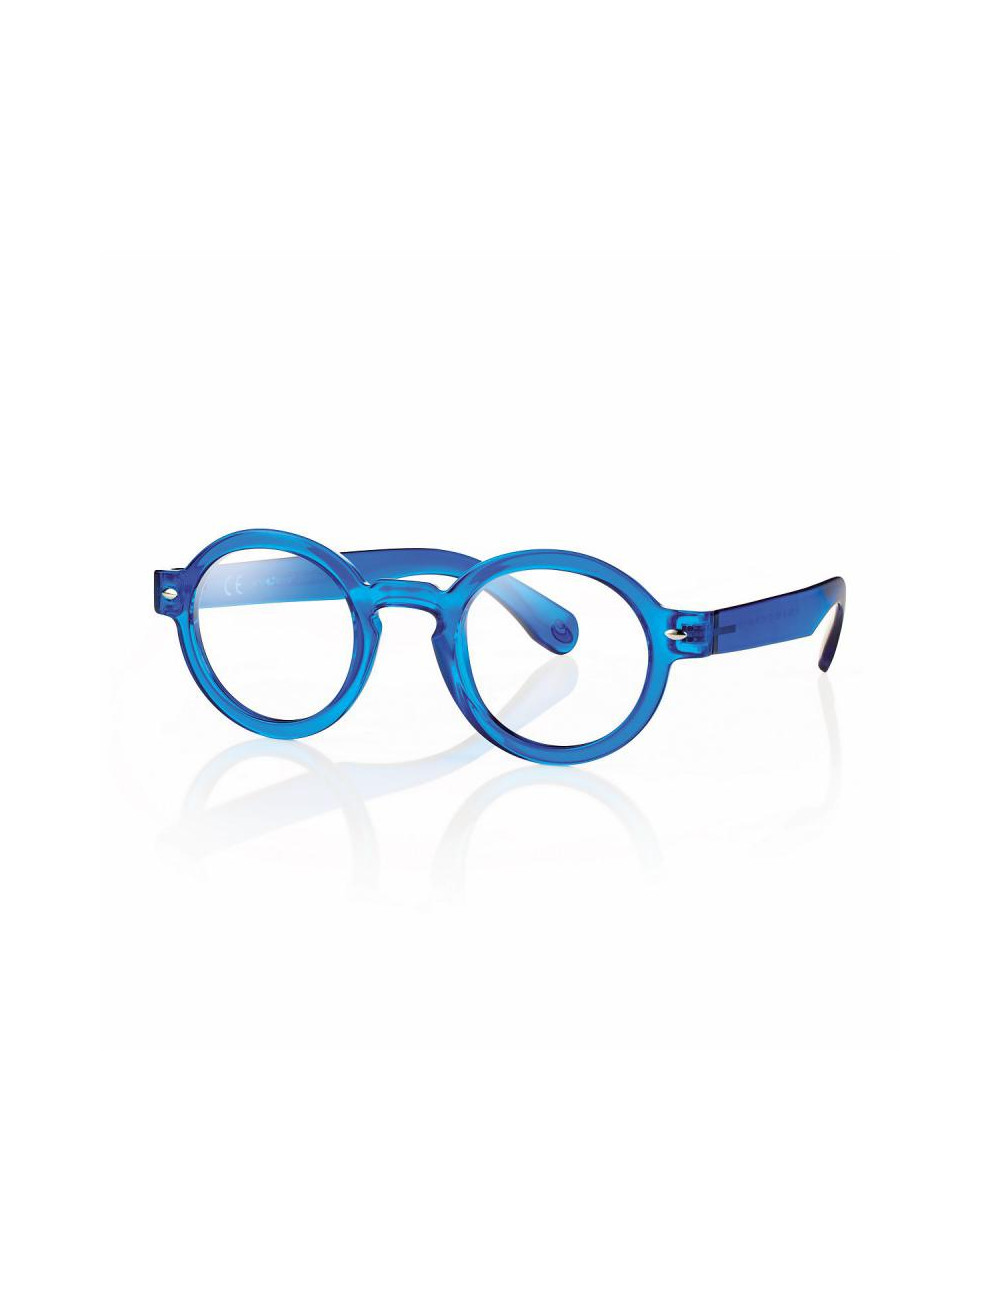 Centrostyle Smart  R0359 reading eyeglasses